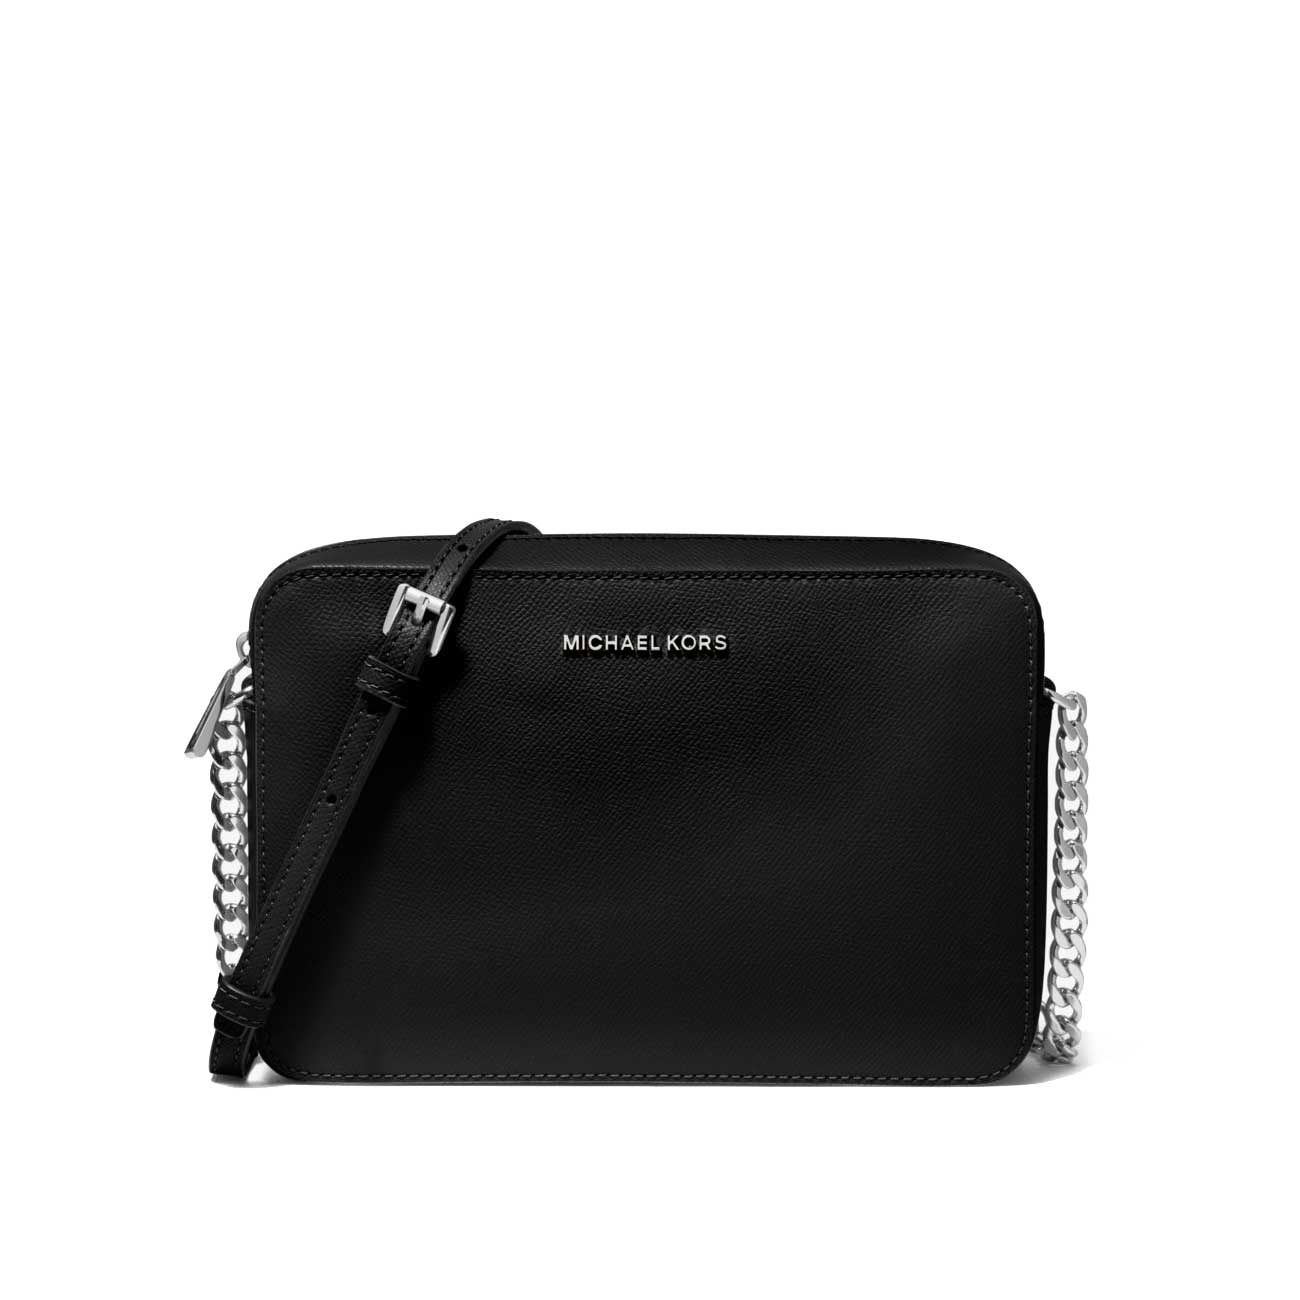 EUC Michael Kors Black Jet Set Large Saffiano Leather Crossbody Bag Retails  $168